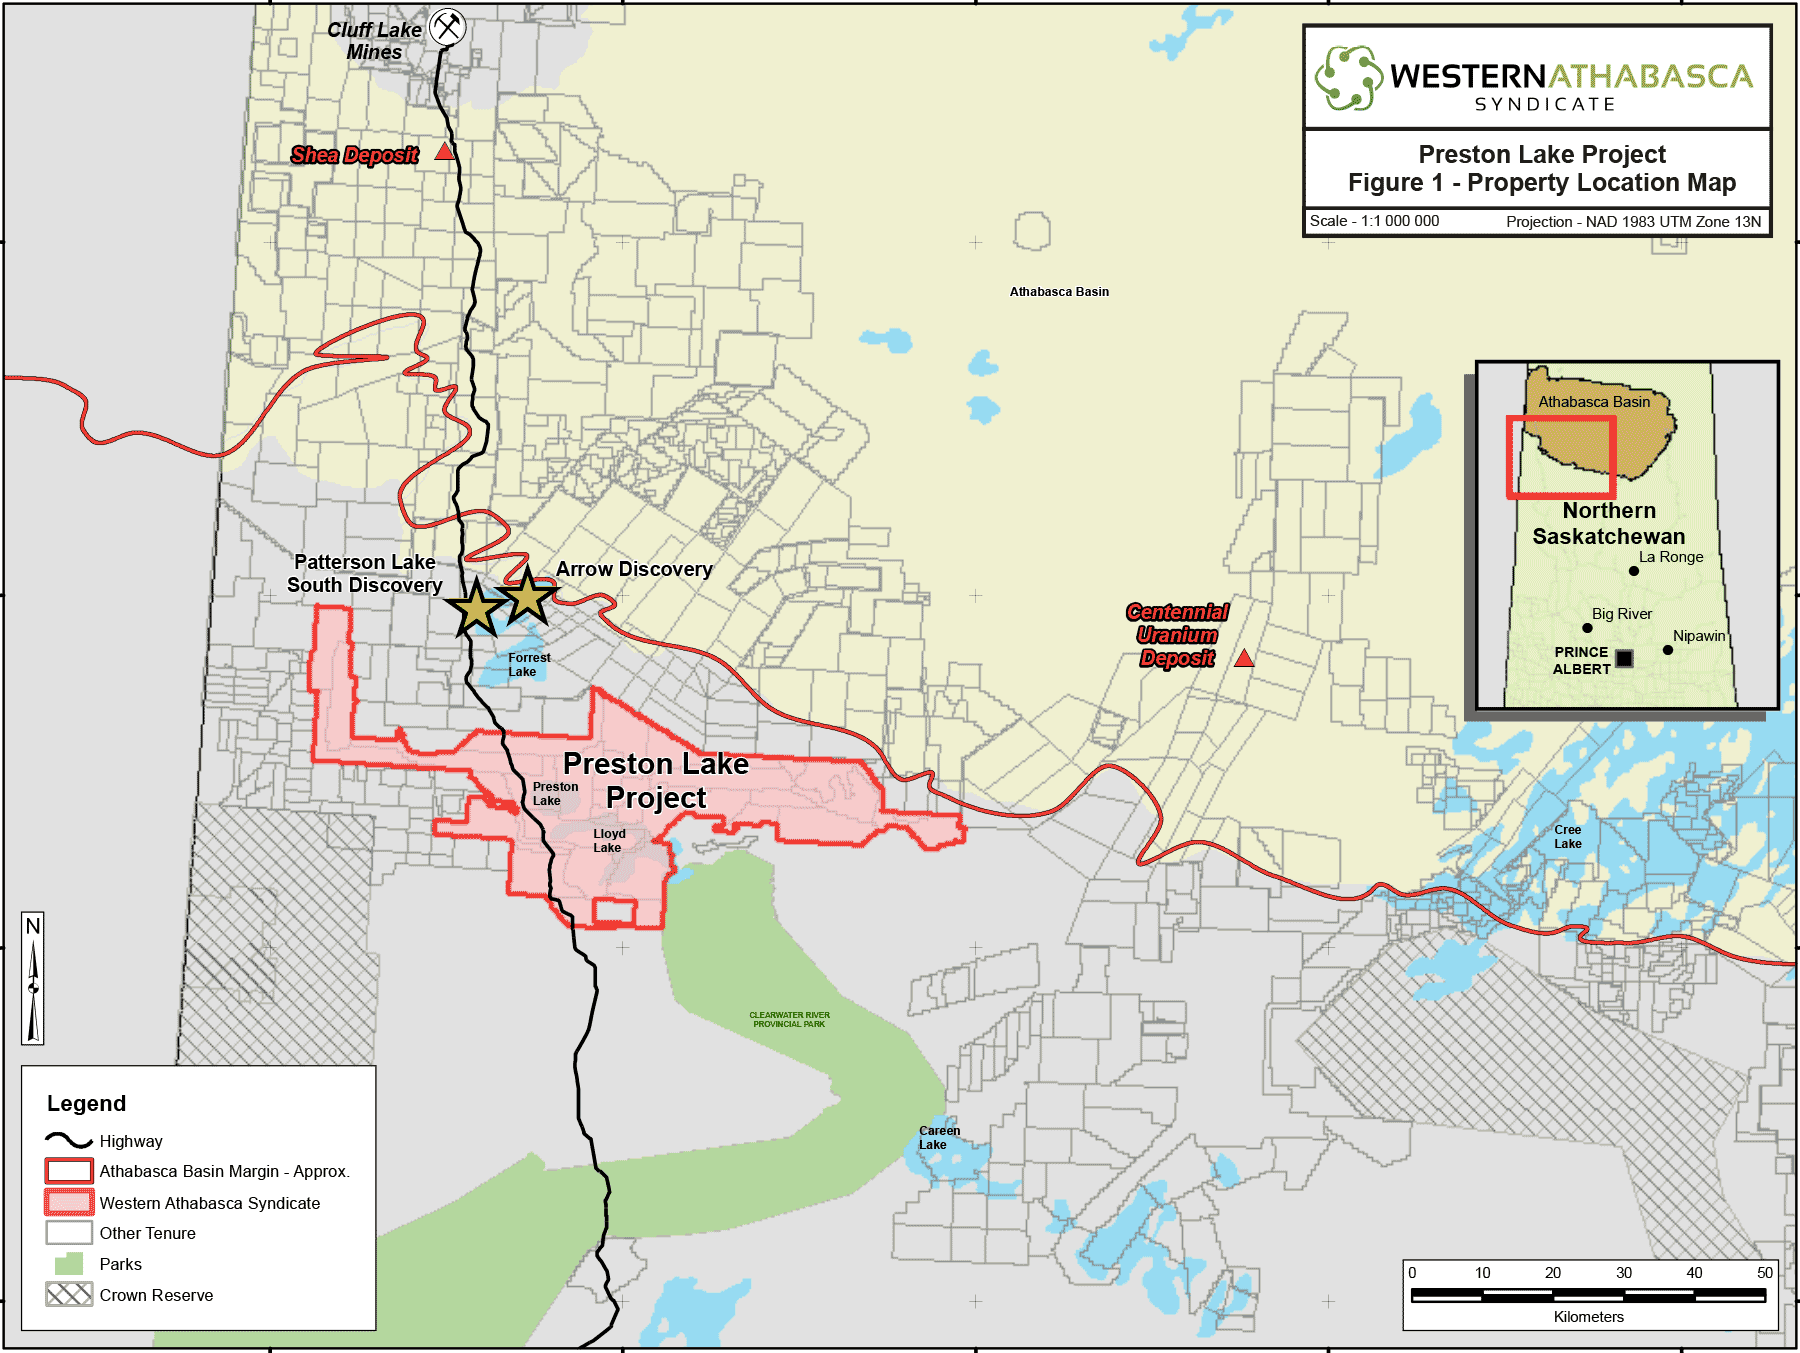 Preston Lake Project Figure - Property Location Map